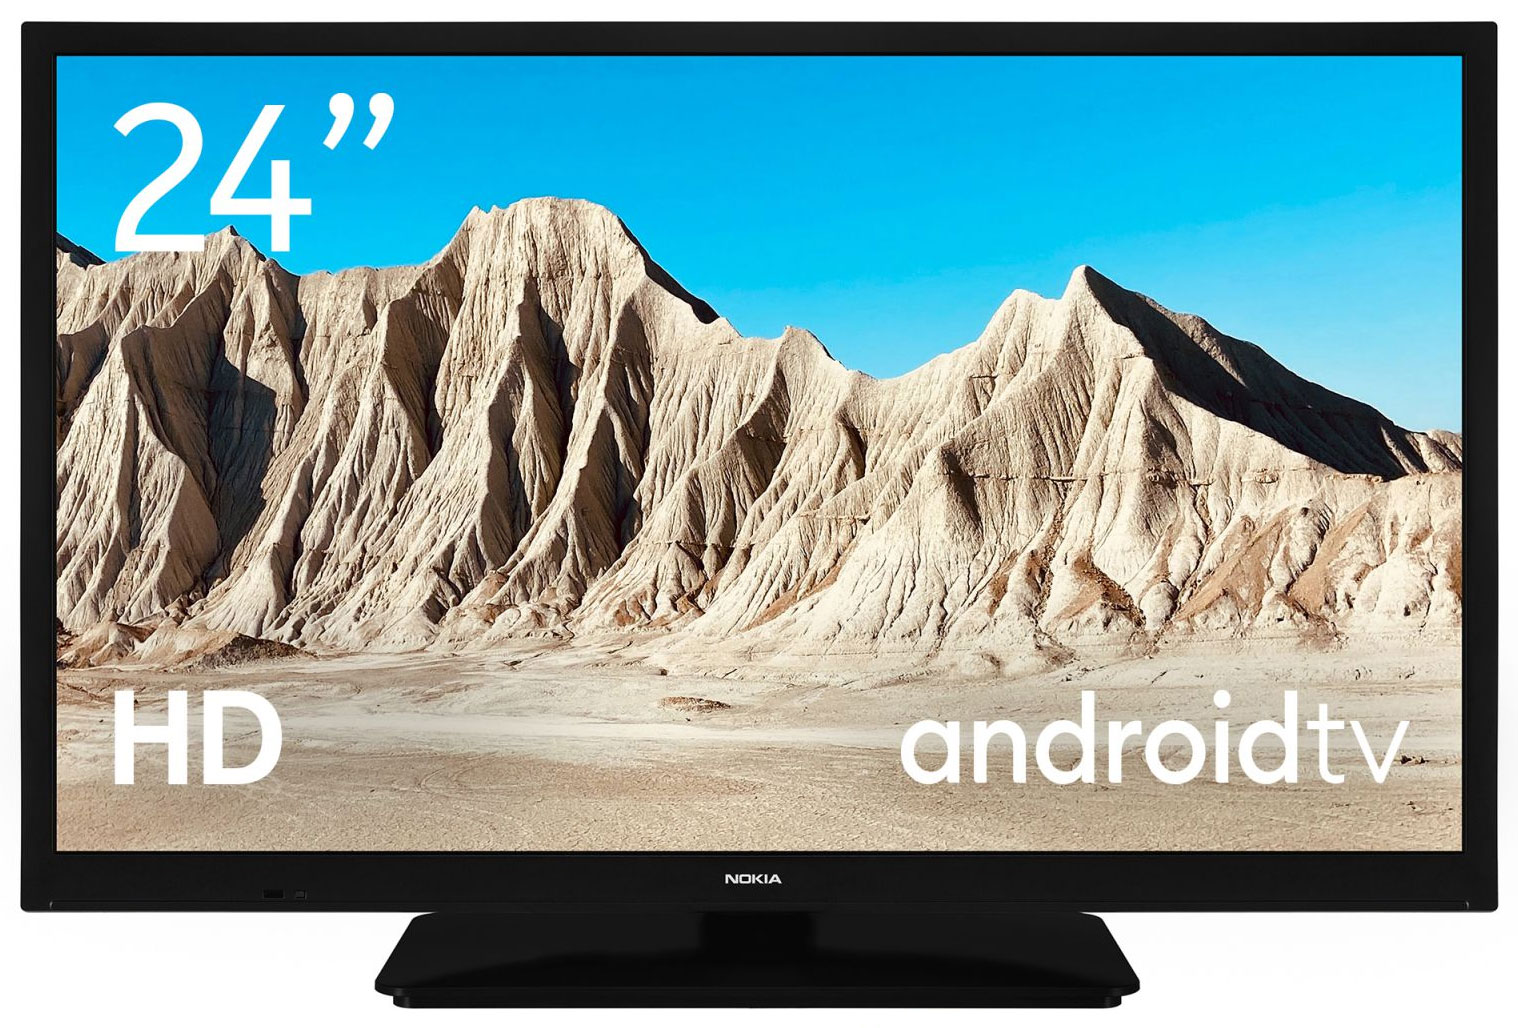 Steil Menselijk ras Alarmerend Review: Nokia 2400A Android TV draait ook op 12v! - GadgetGear.nl